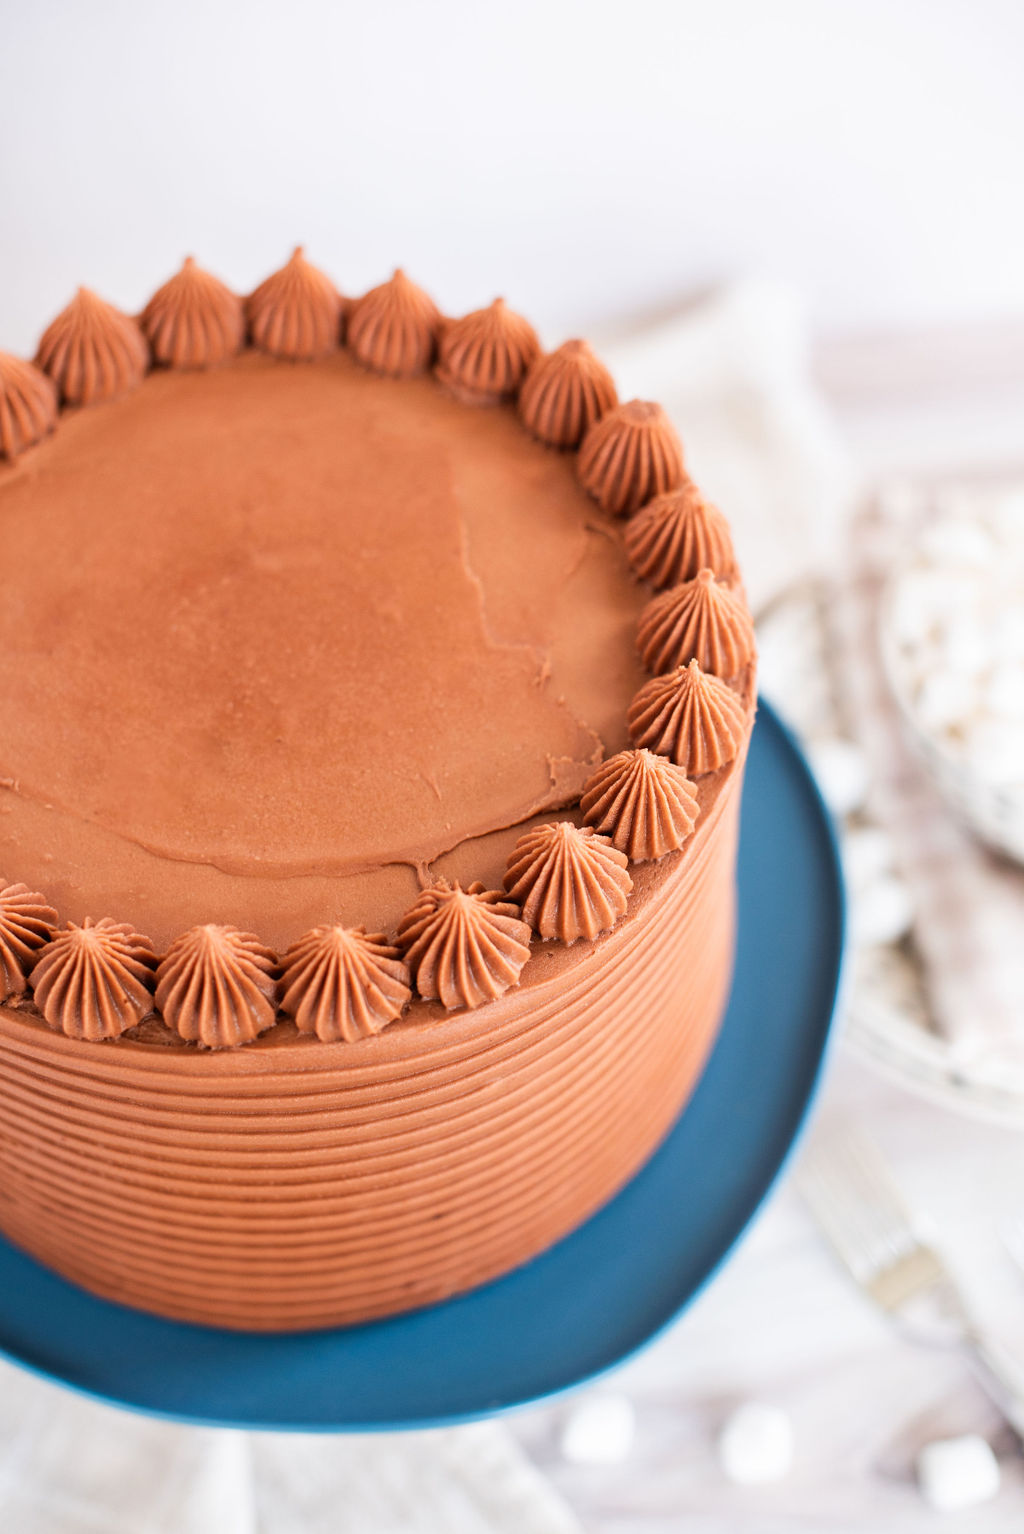 chocolate buttercream design on a cake.